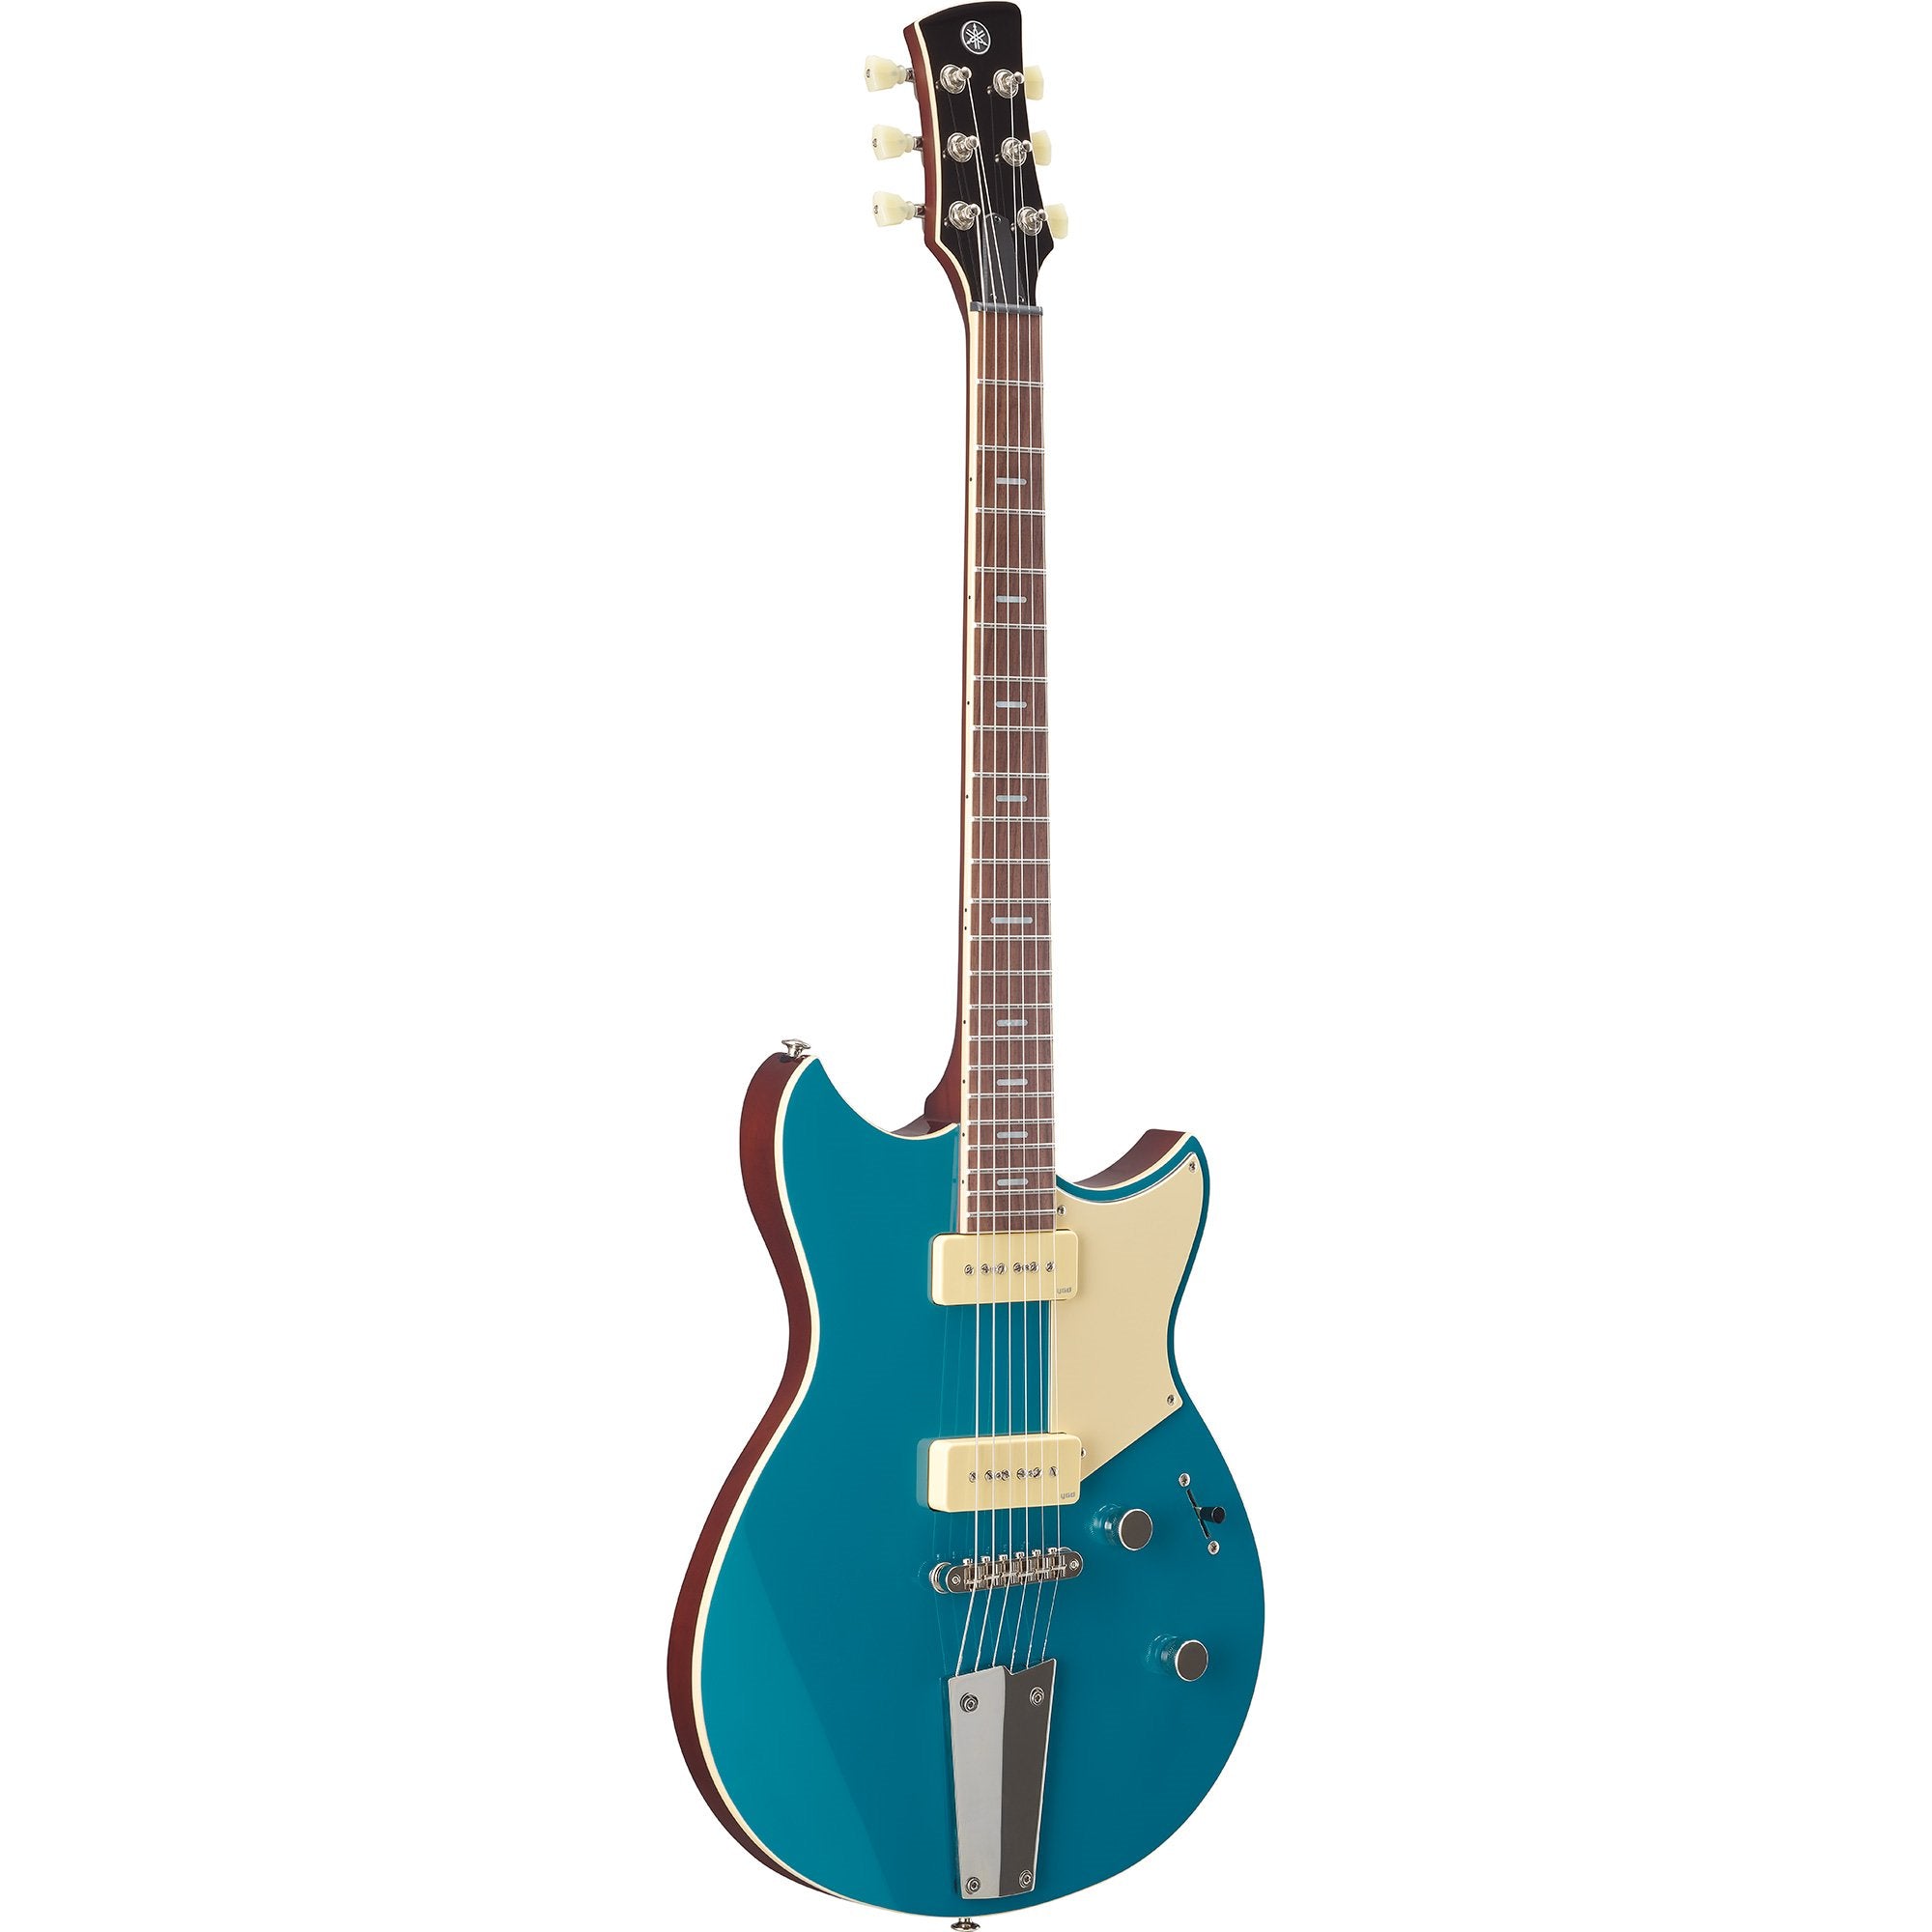 Yamaha Revstar Professional RSP02T Electric Guitar, Swift Blue